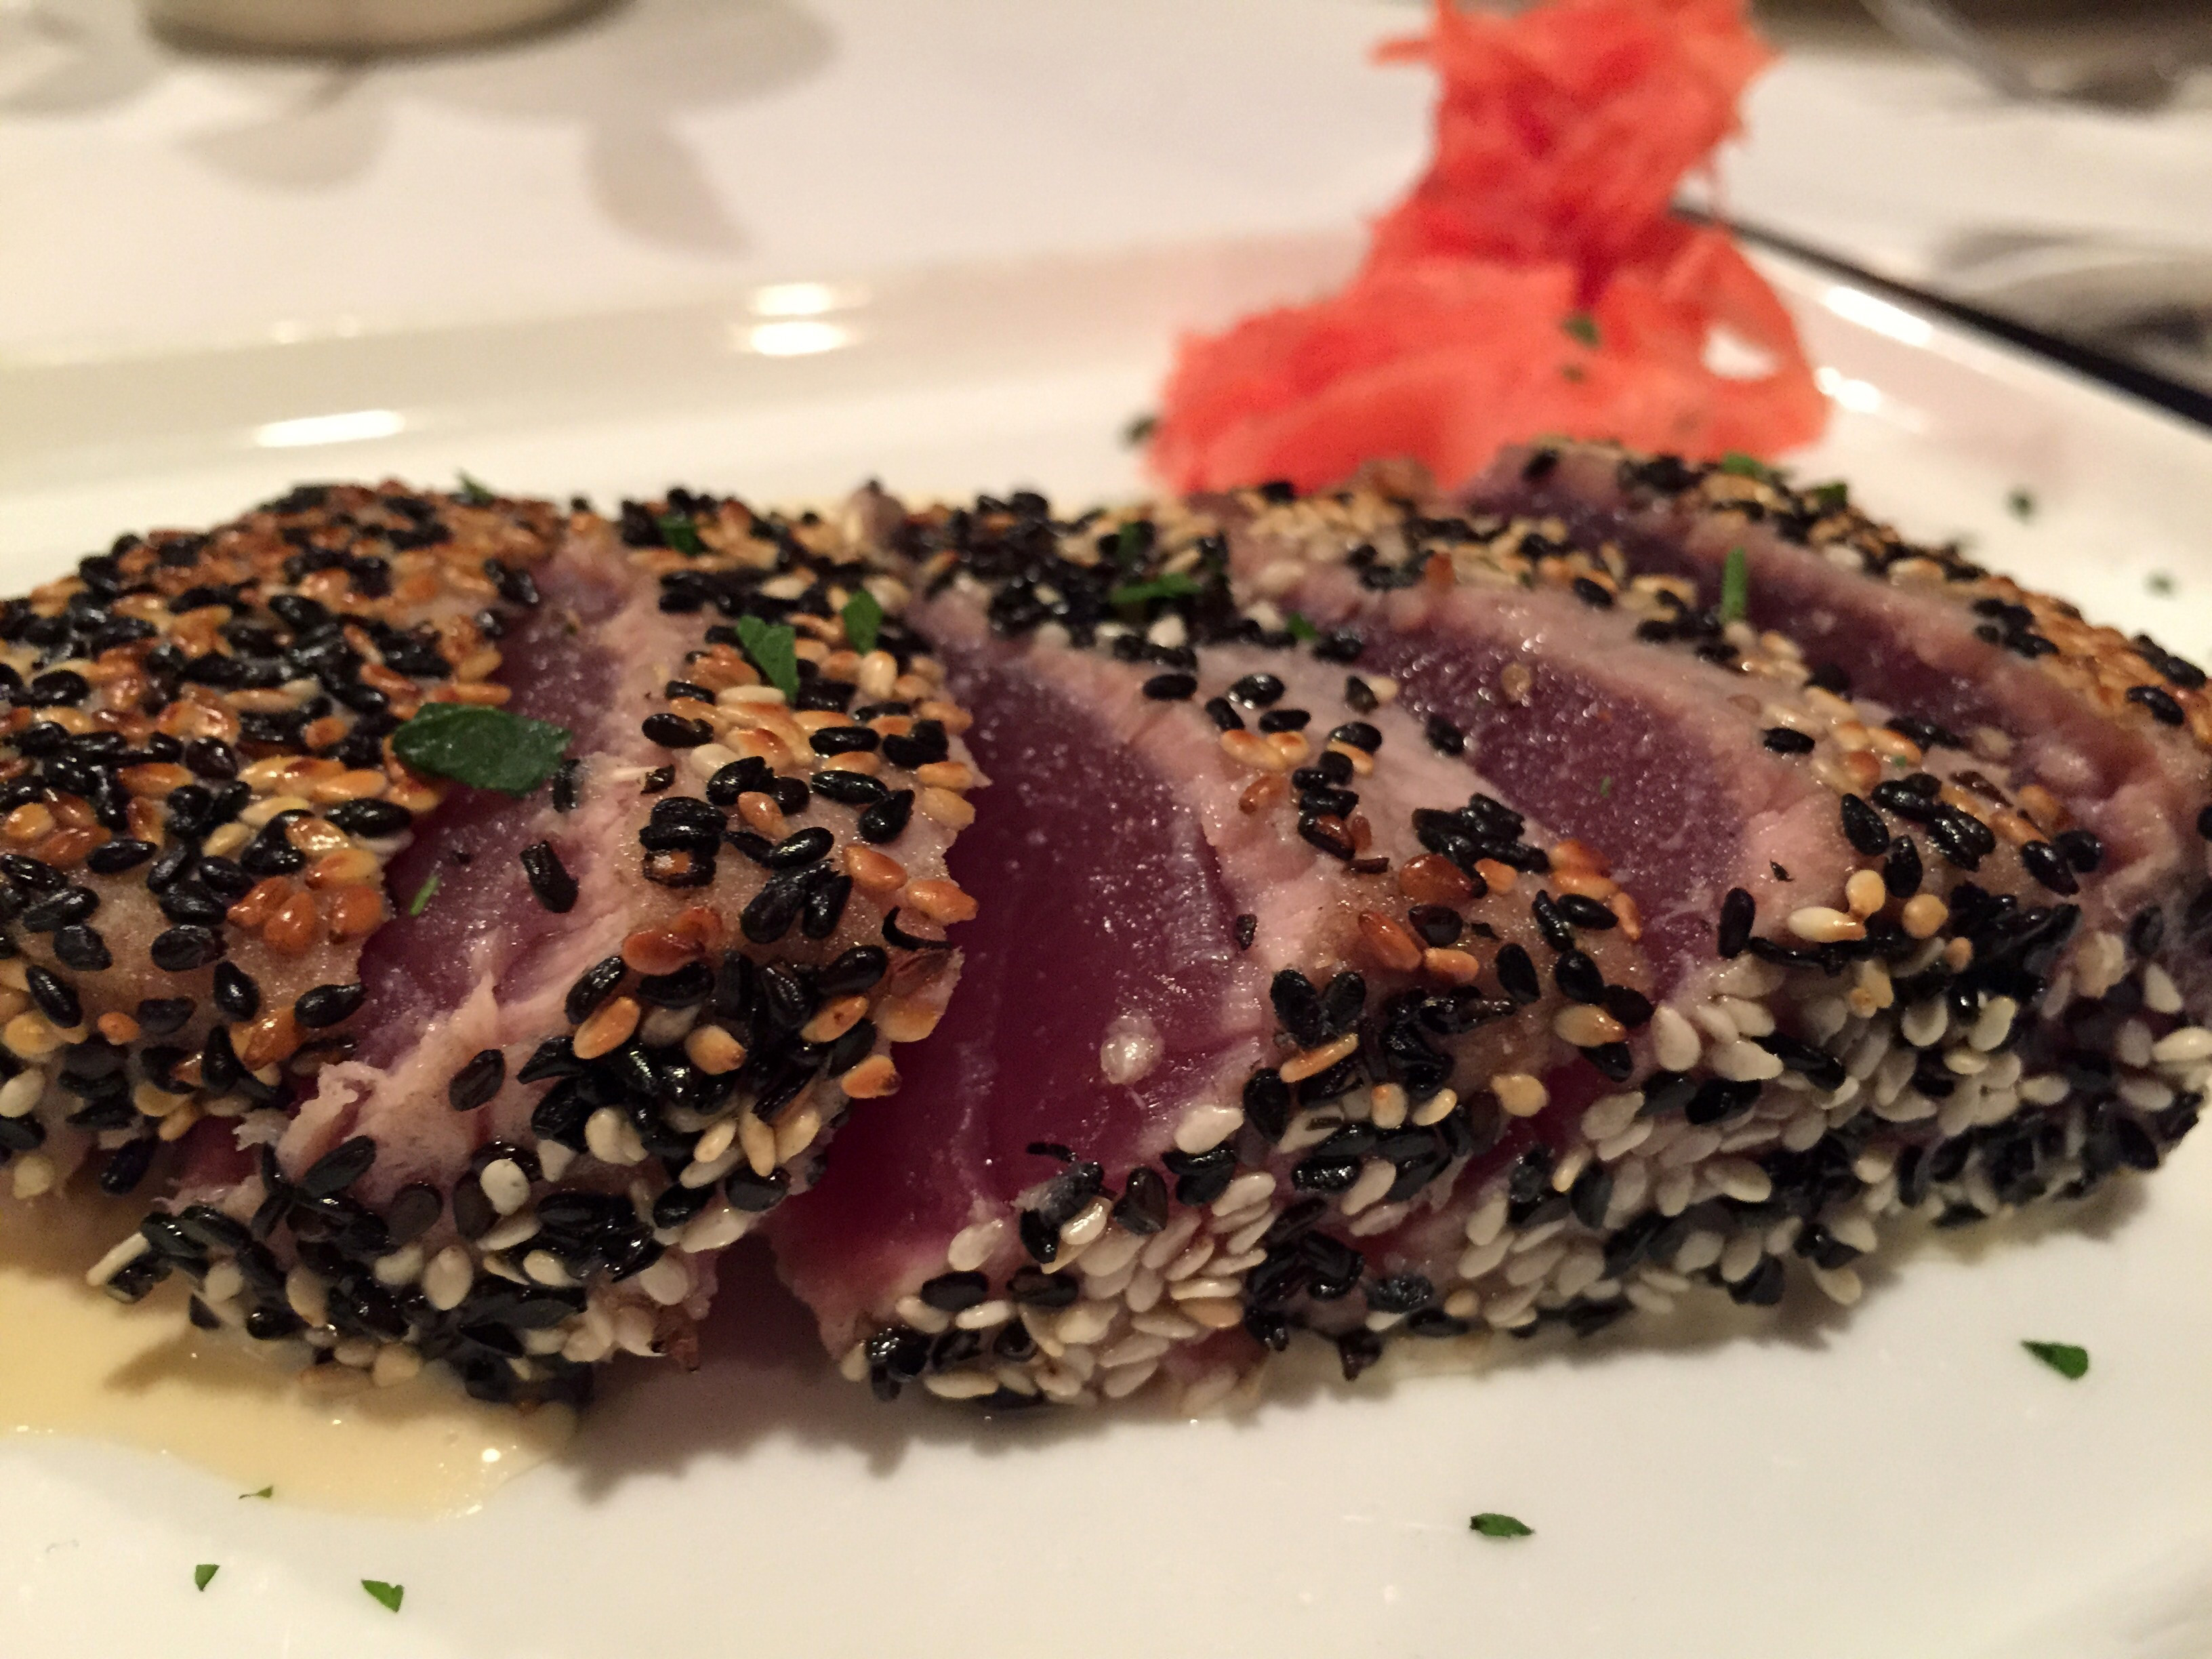 Tuna Fish sushi on a plate image - Free stock photo ...